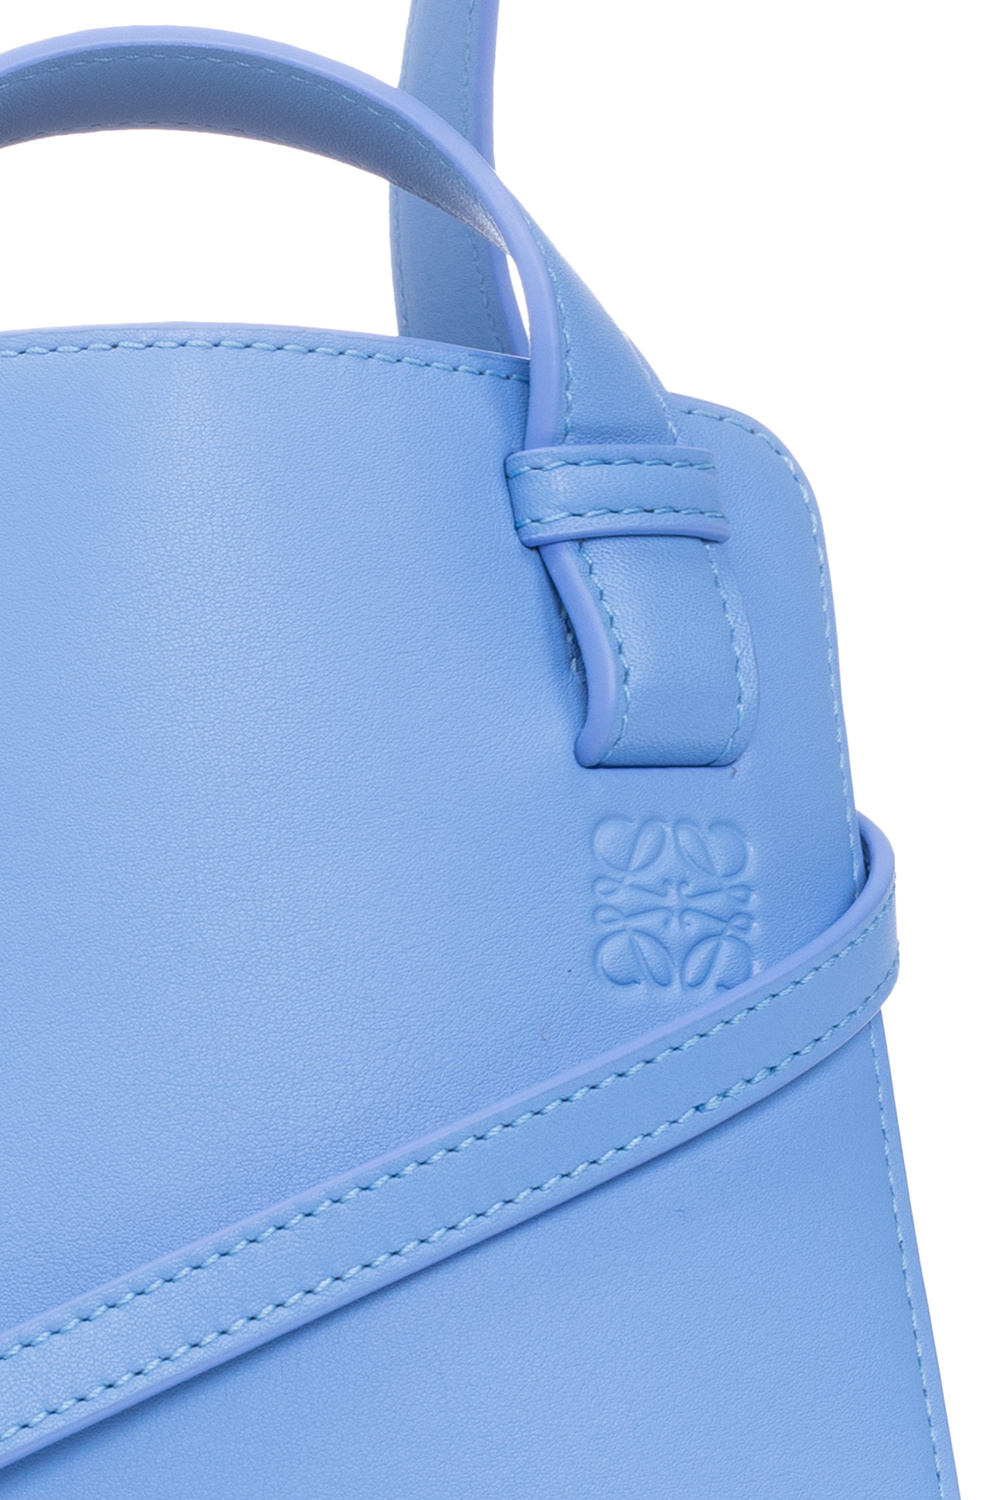 Paulas Ibiza Jacquard Shoulder Strap in Blue - Loewe